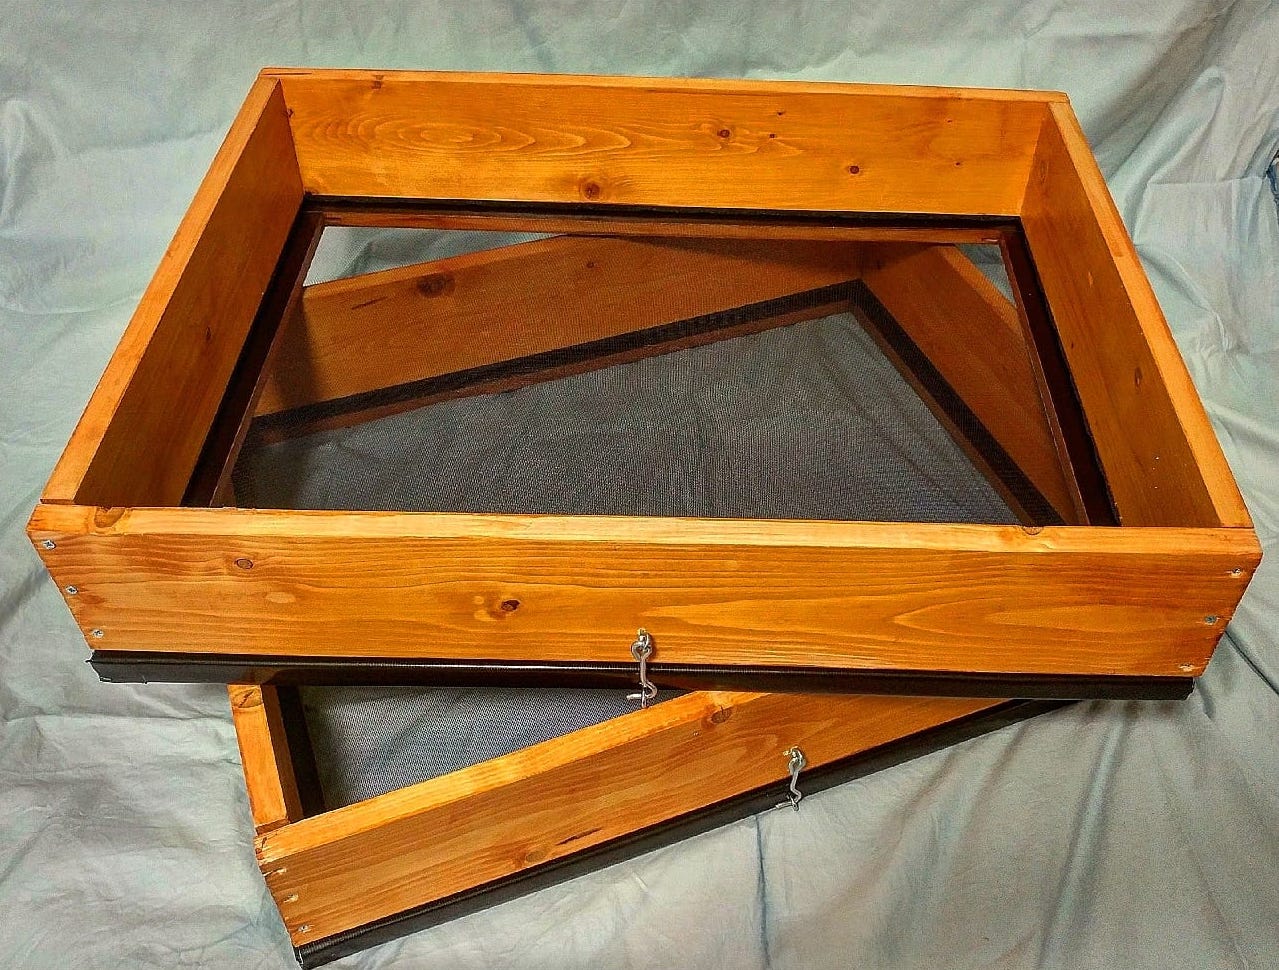  Handmade 18” x 24” Deckle Boxes. 